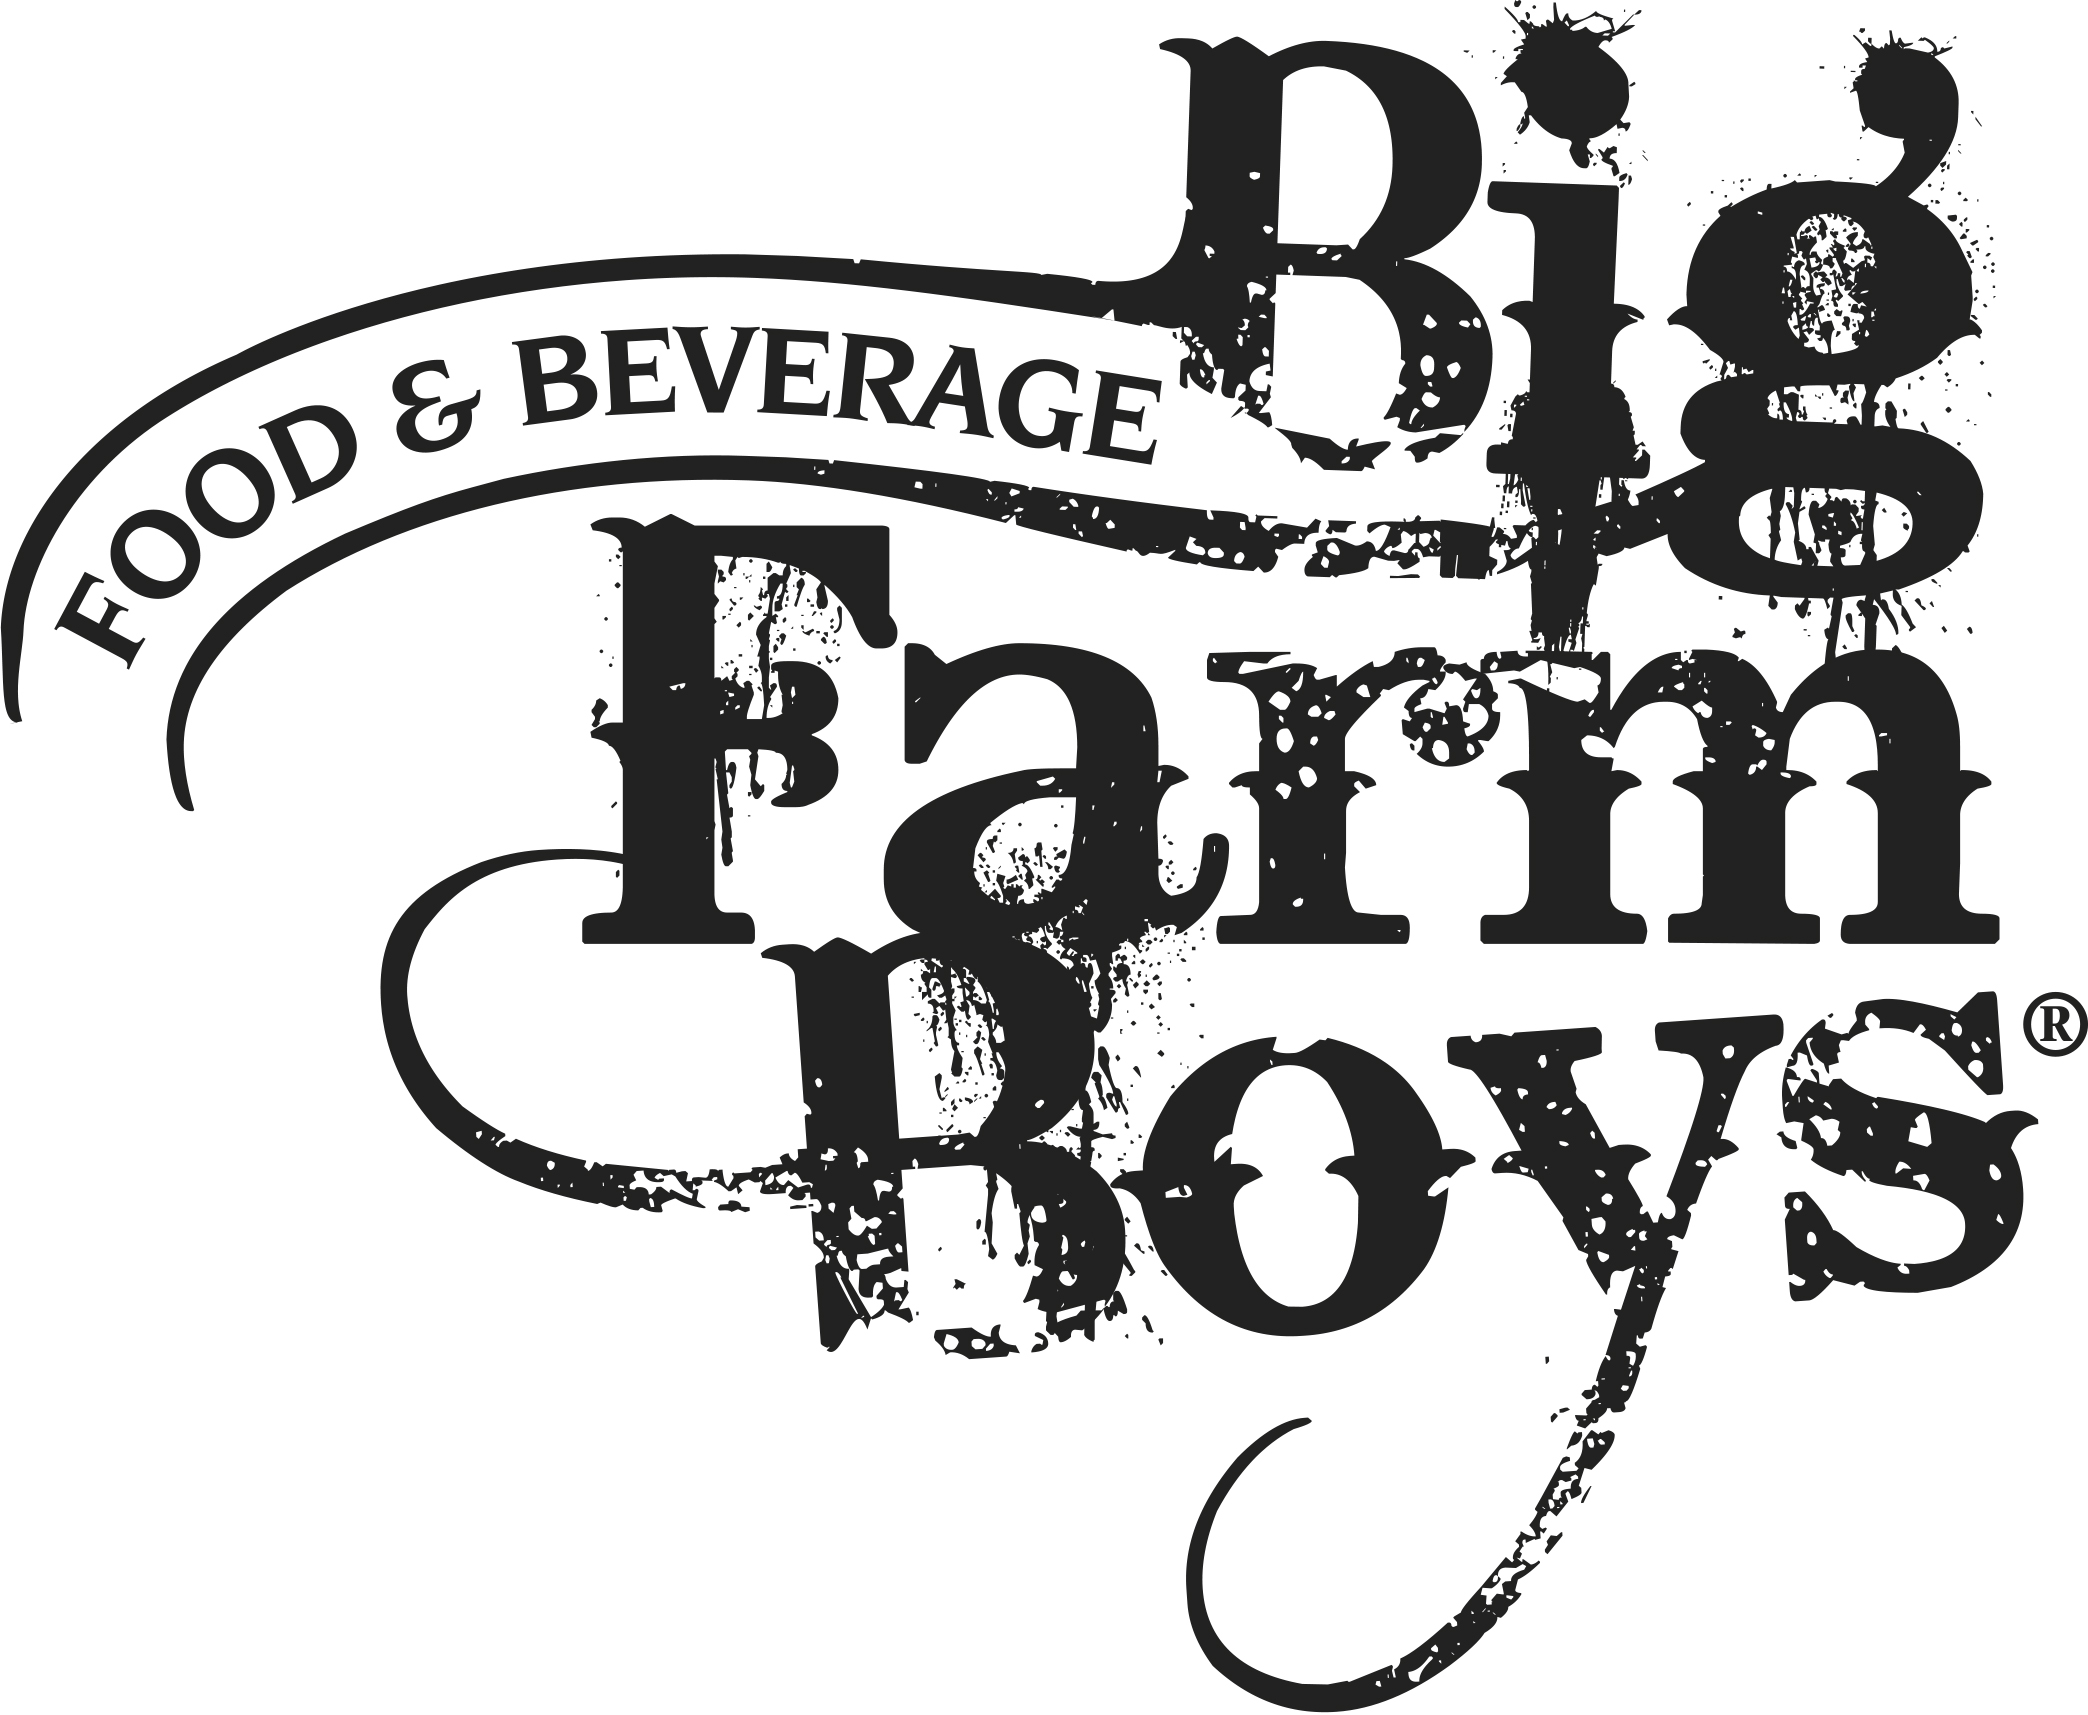 Big Farm Boys